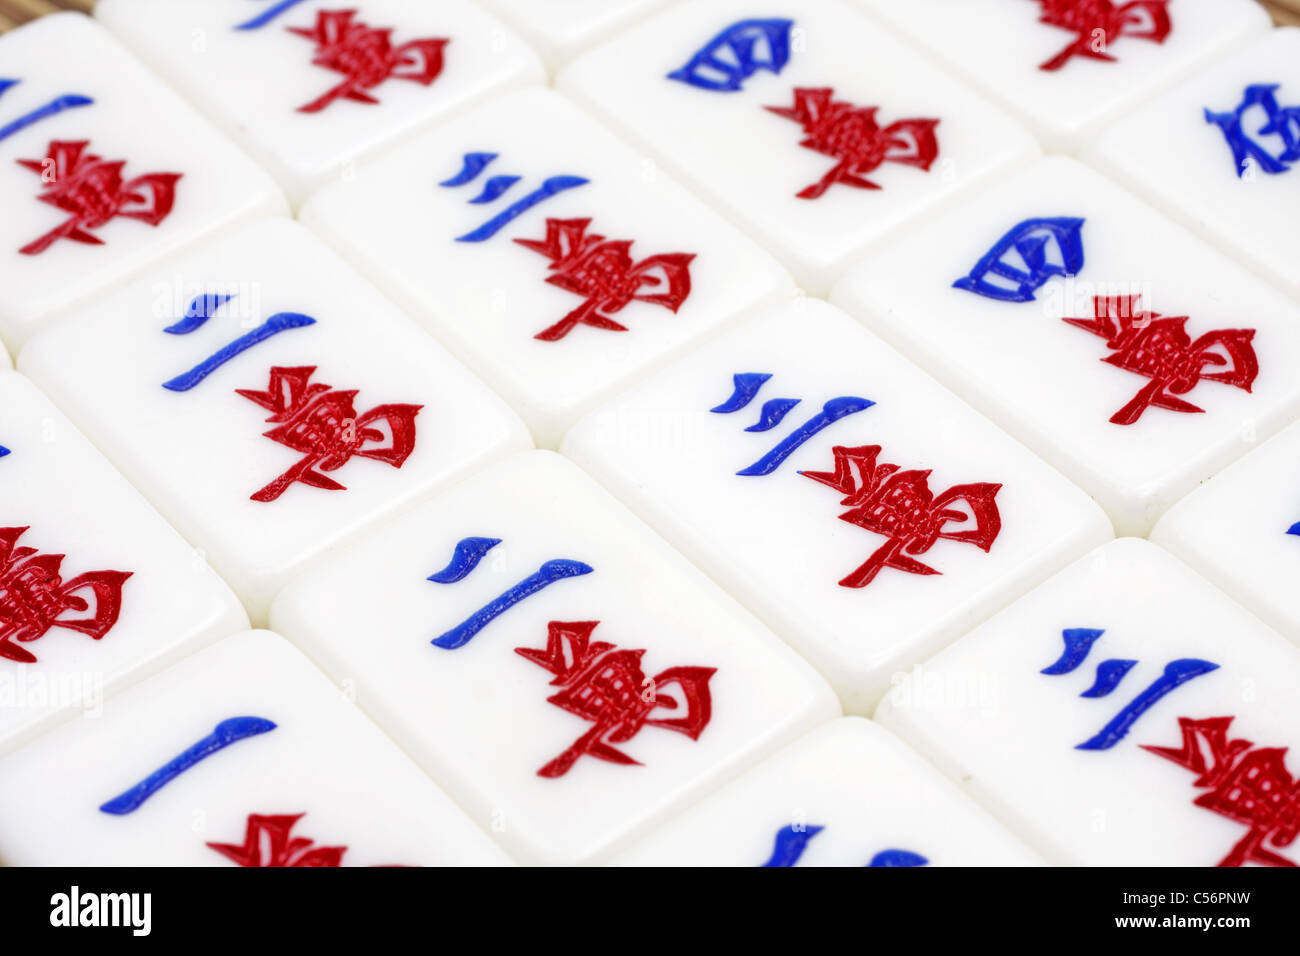 Mahjong tiles Stock Photo